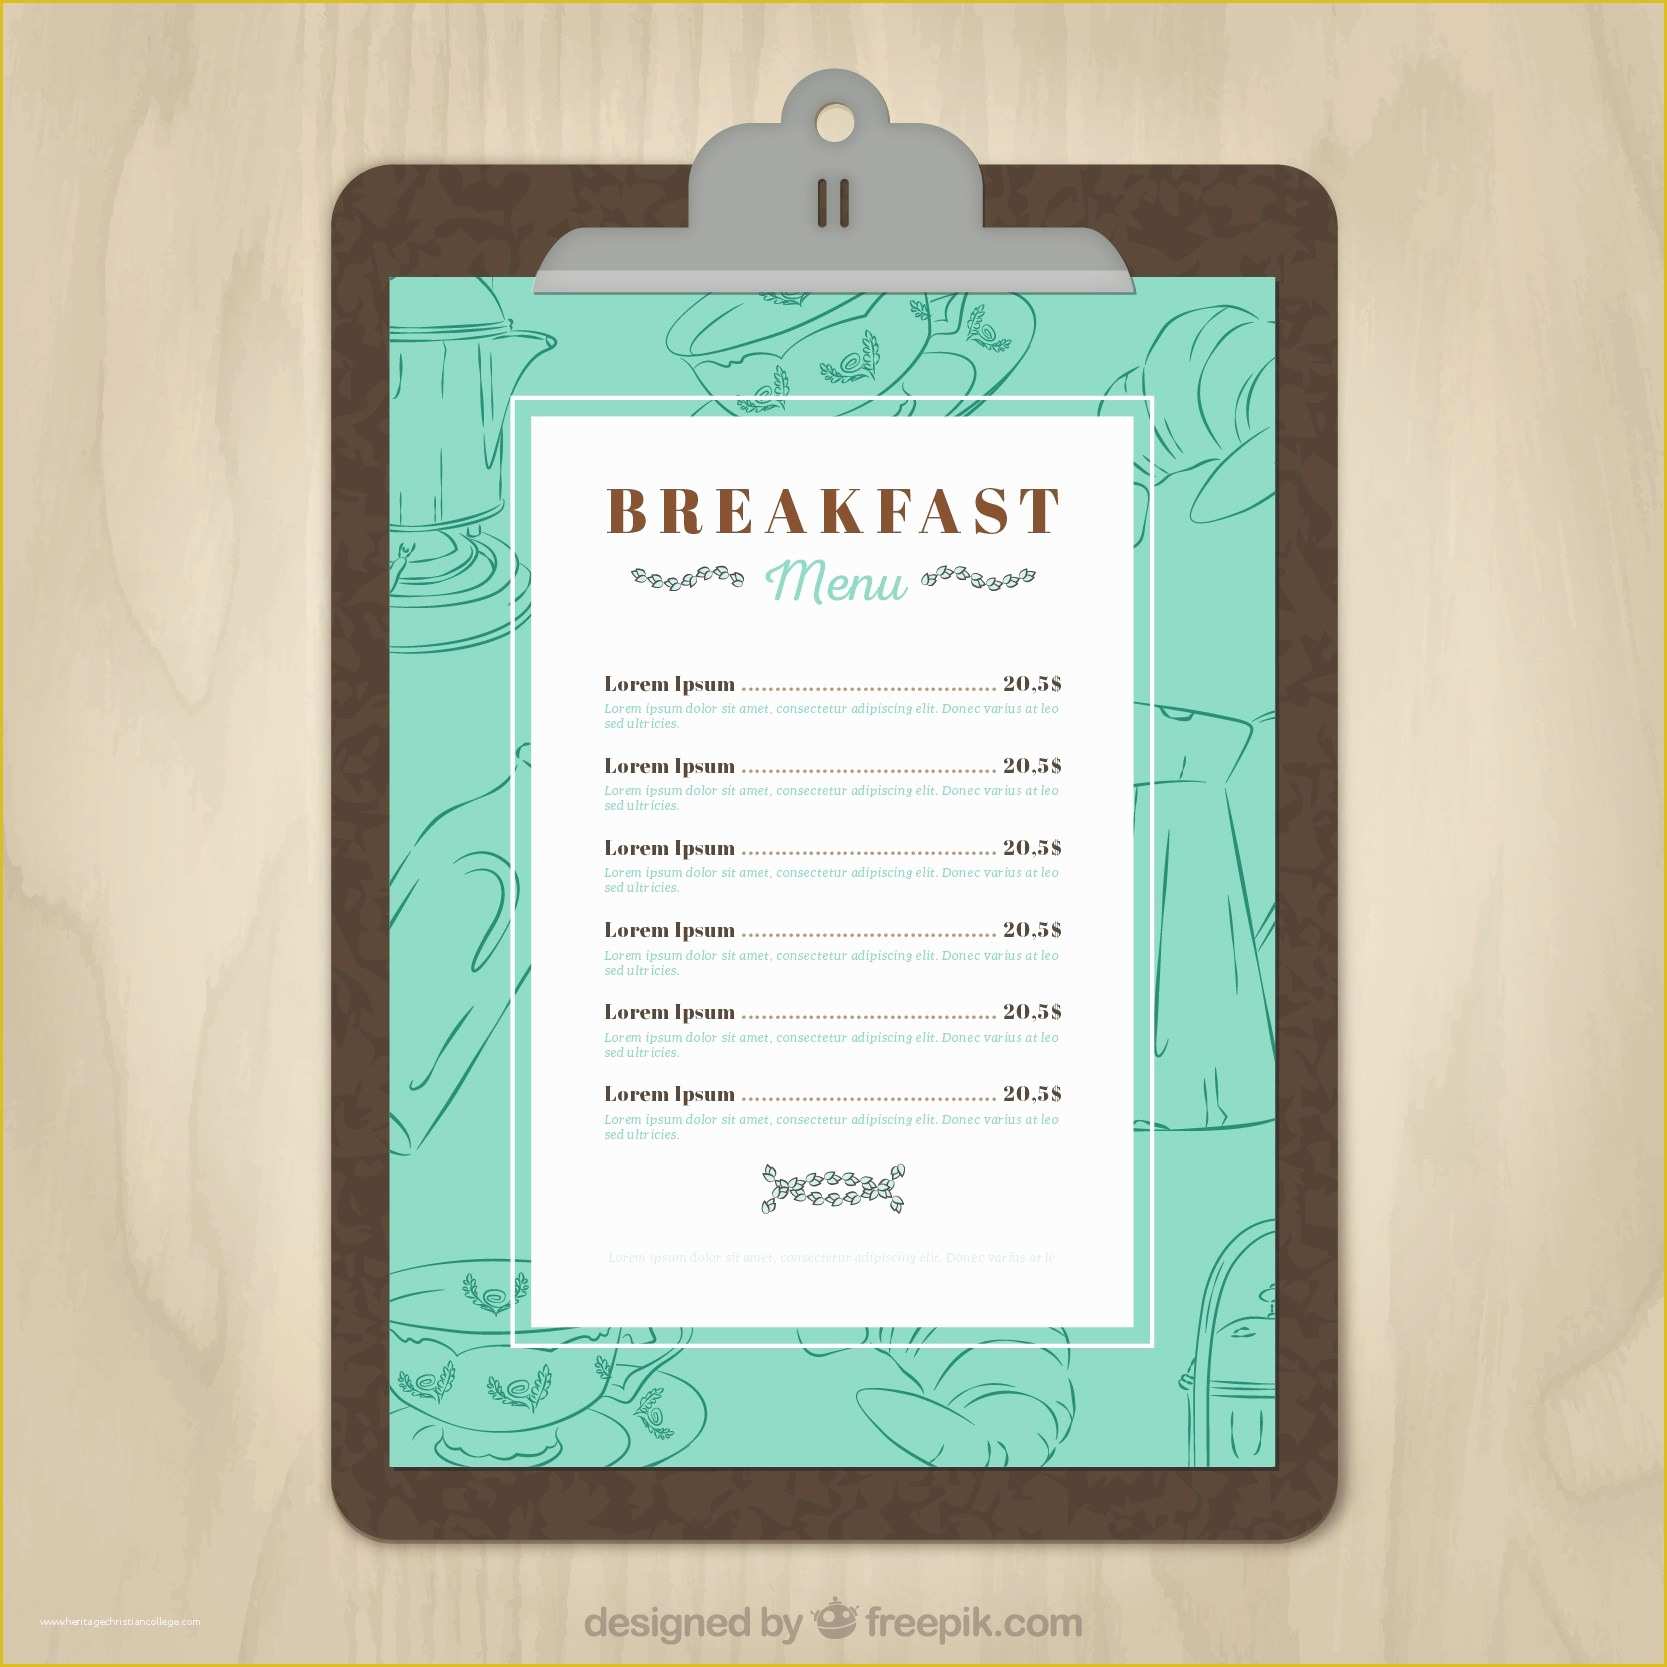 Sample Menu Template Free Of 11 Free Sample Breakfast Menu Templates Printable Samples